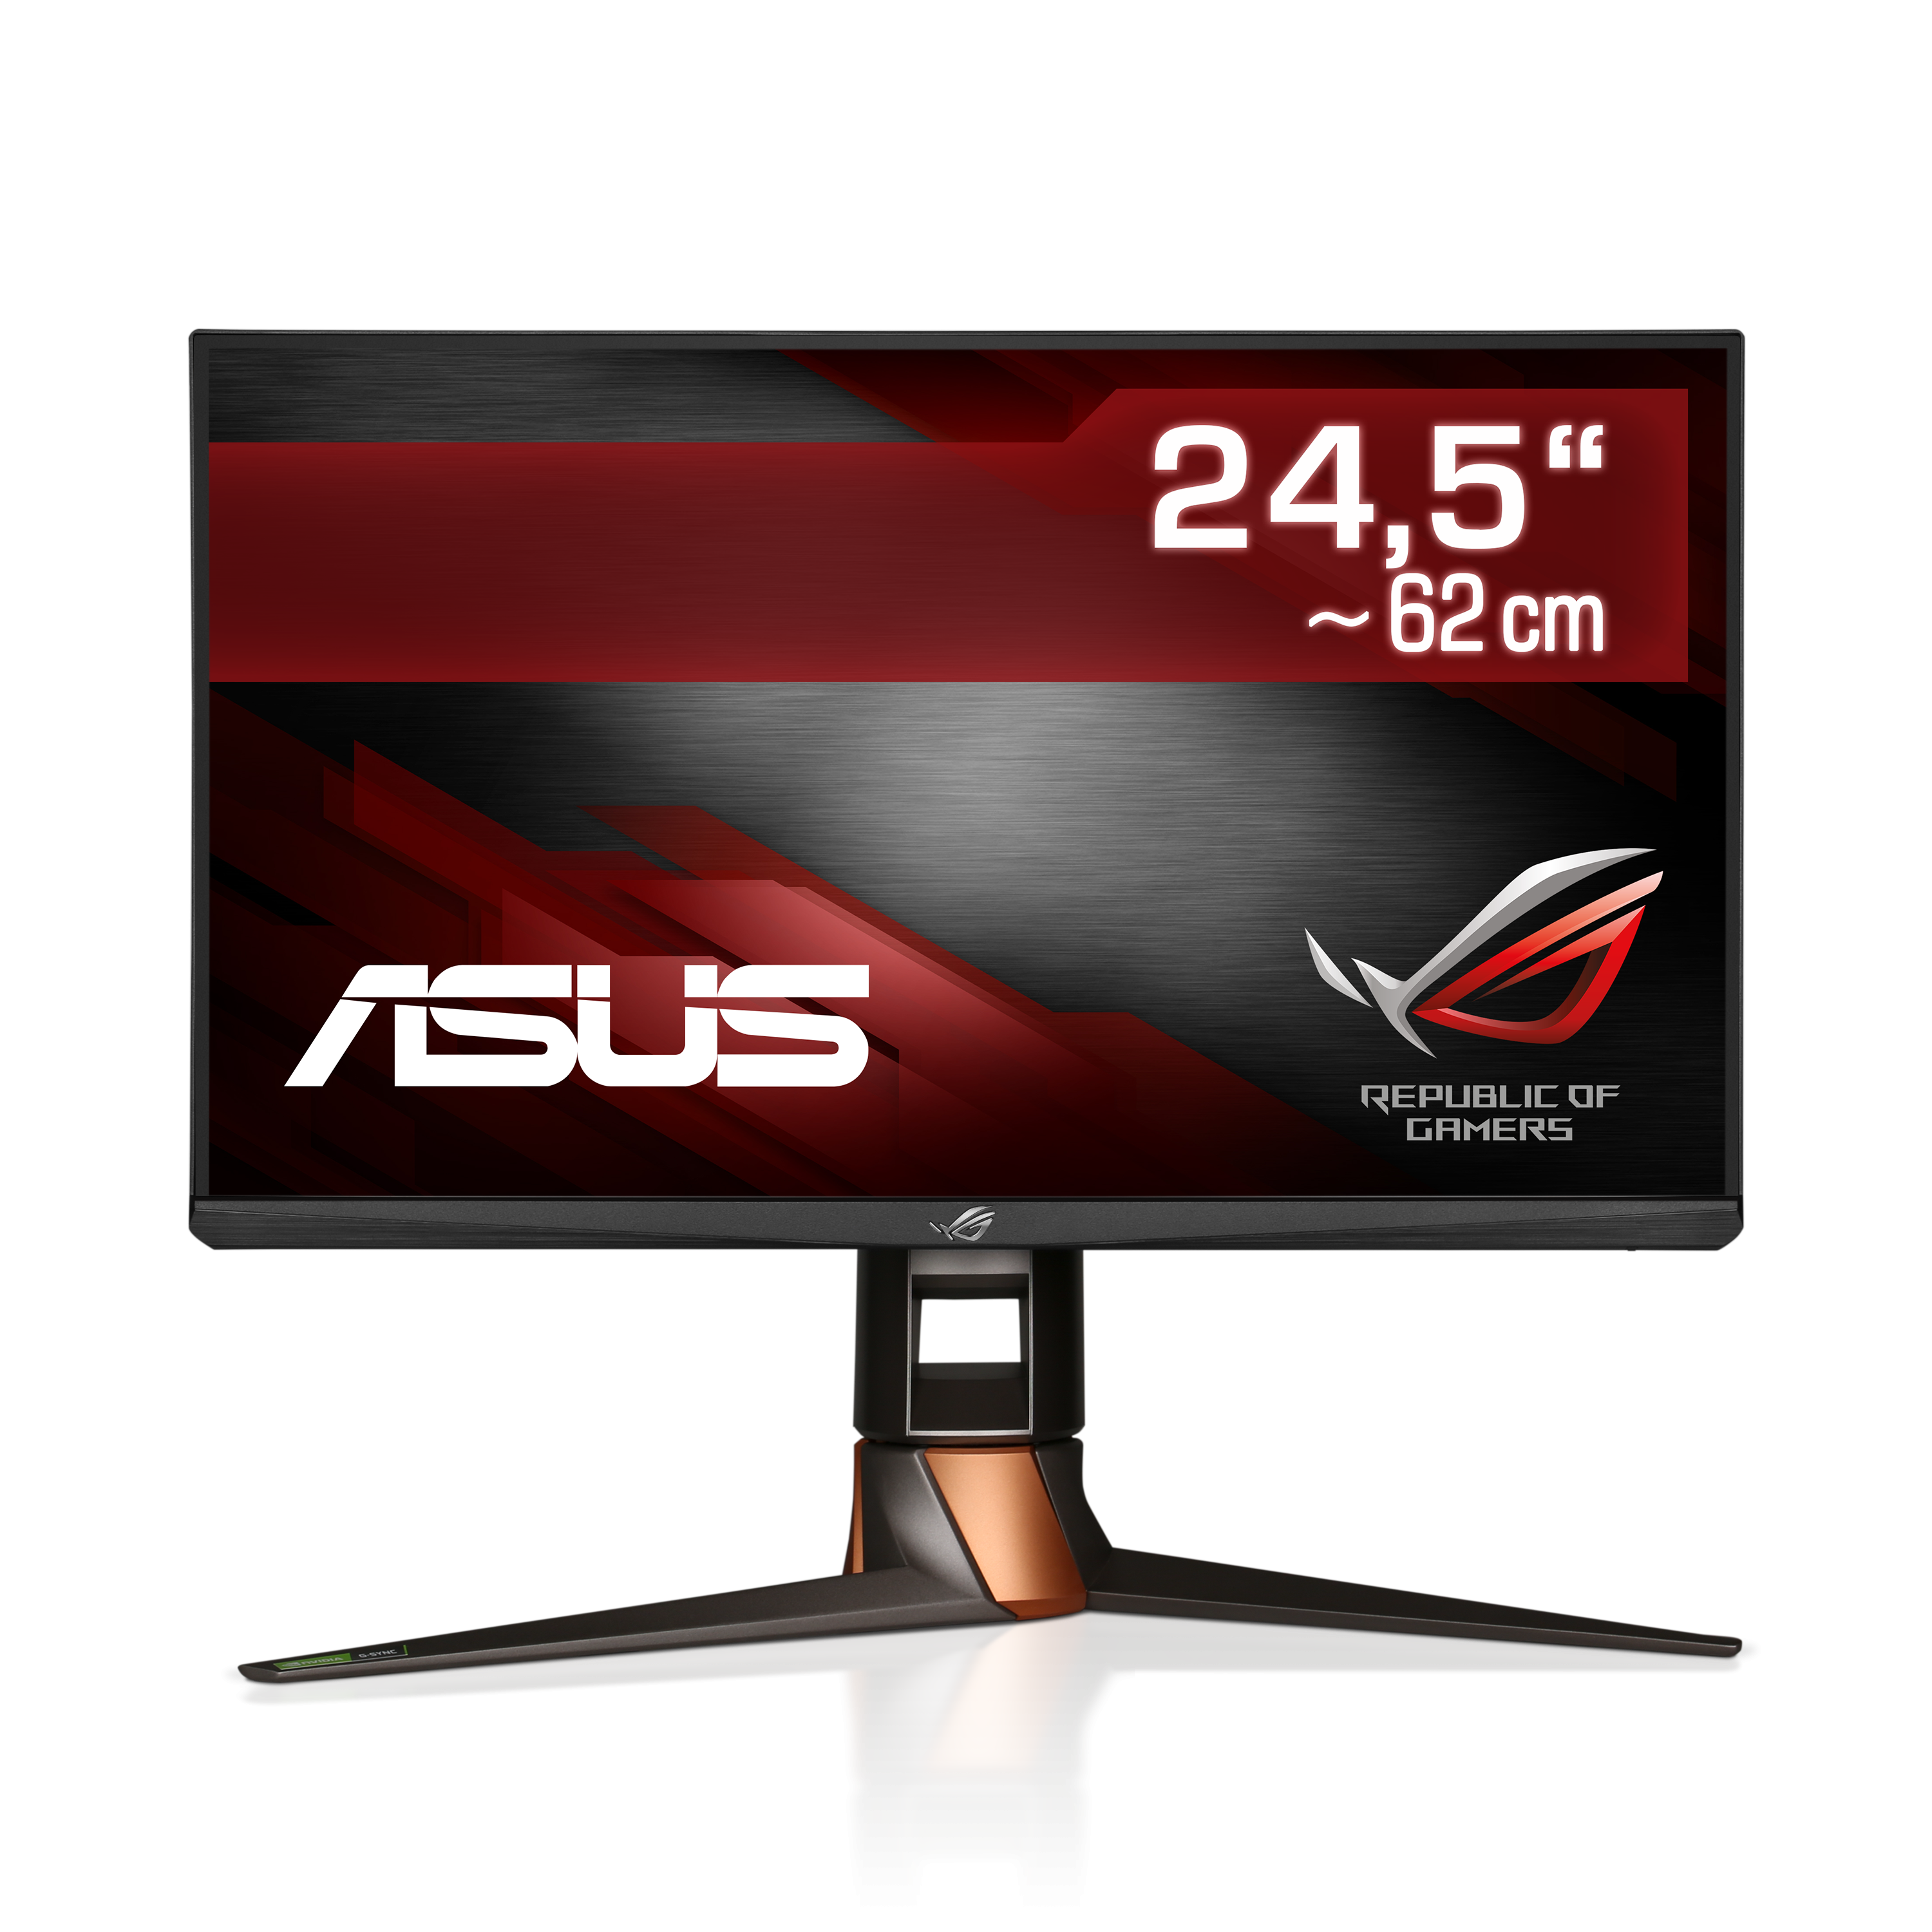  ASUS ROG Swift 360Hz PG259QN 24.5” HDR Gaming Monitor, 1080P  Full HD, Fast IPS, 1ms, G-SYNC, ULMB, Eye Care, HDMI DisplayPort USB,  Ergonomic Design, VESA Wall Mountable, HDR10, World's First 360Hz 